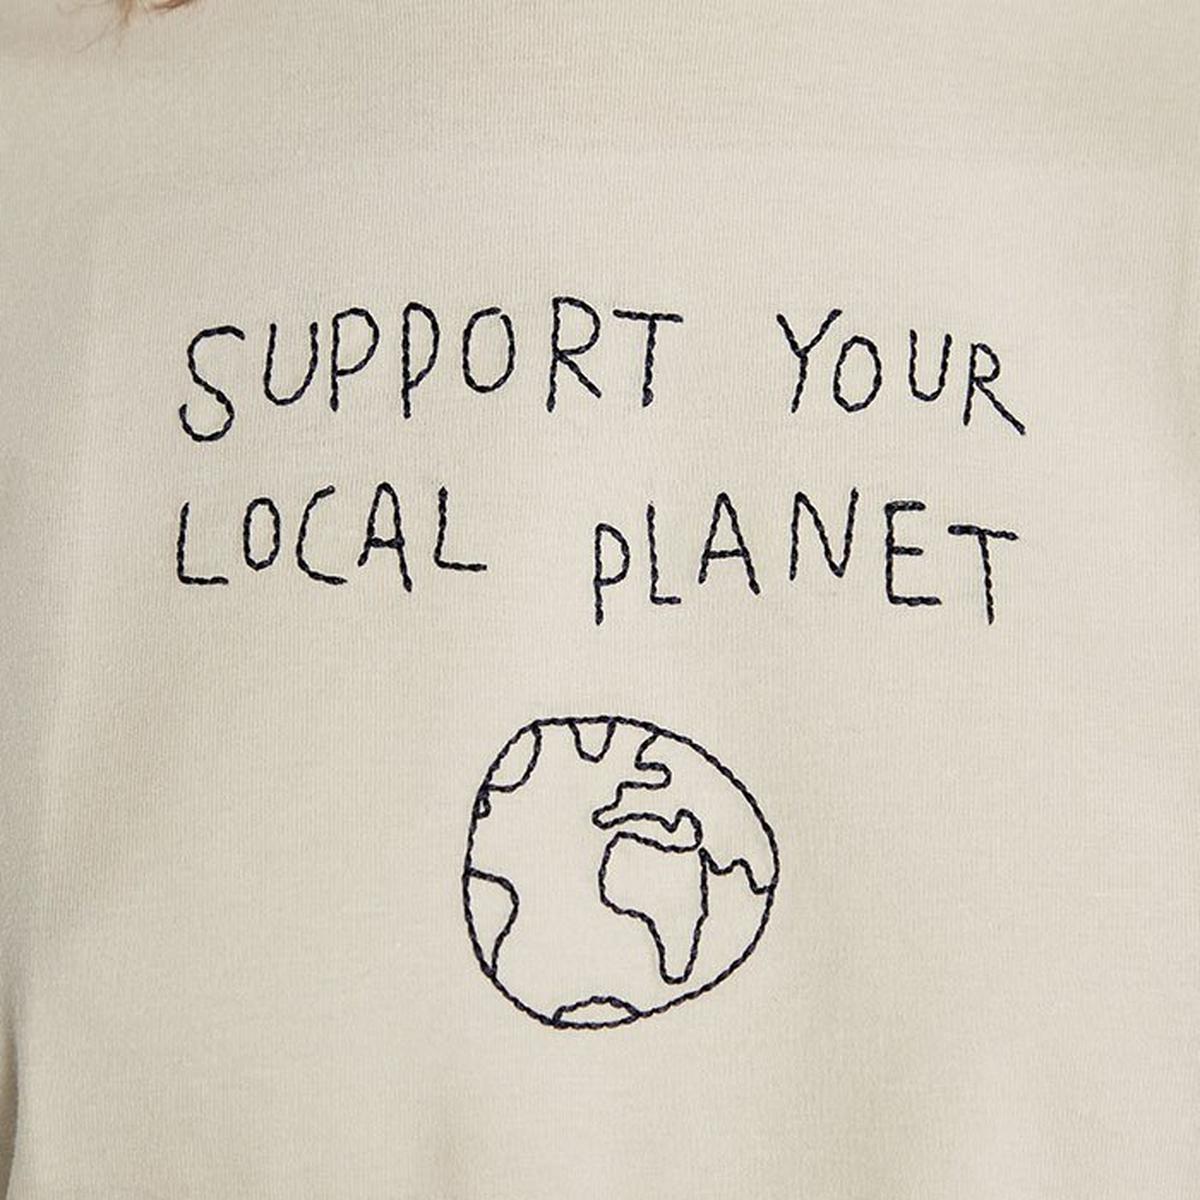 Women's Visby Local Planet T-Shirt